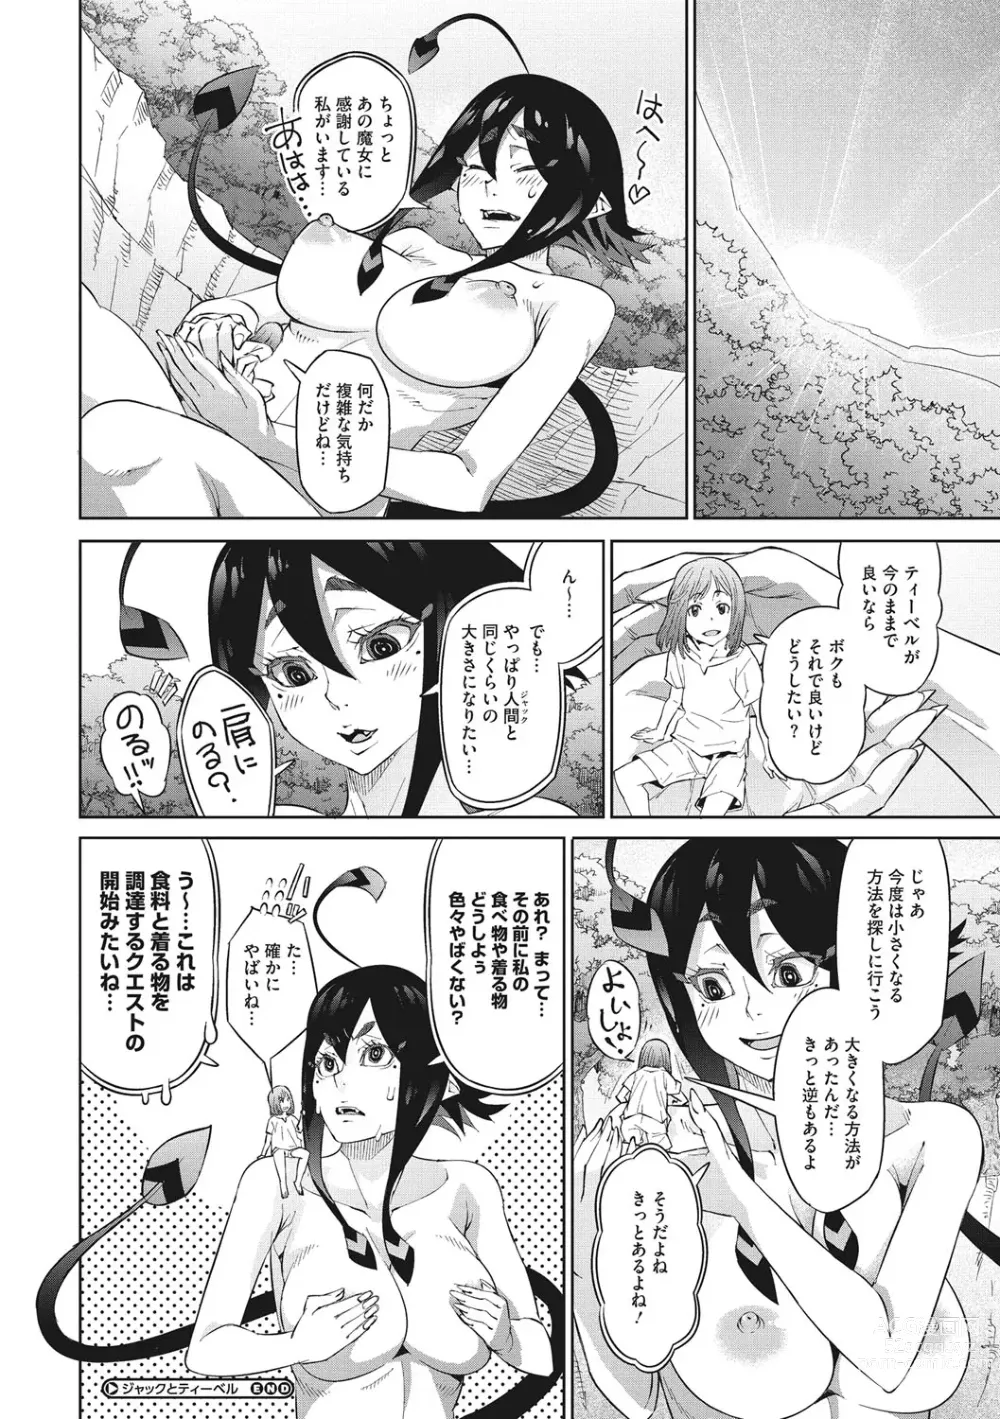 Page 201 of manga Ano Hi Kanojo ga Miseta Kao.